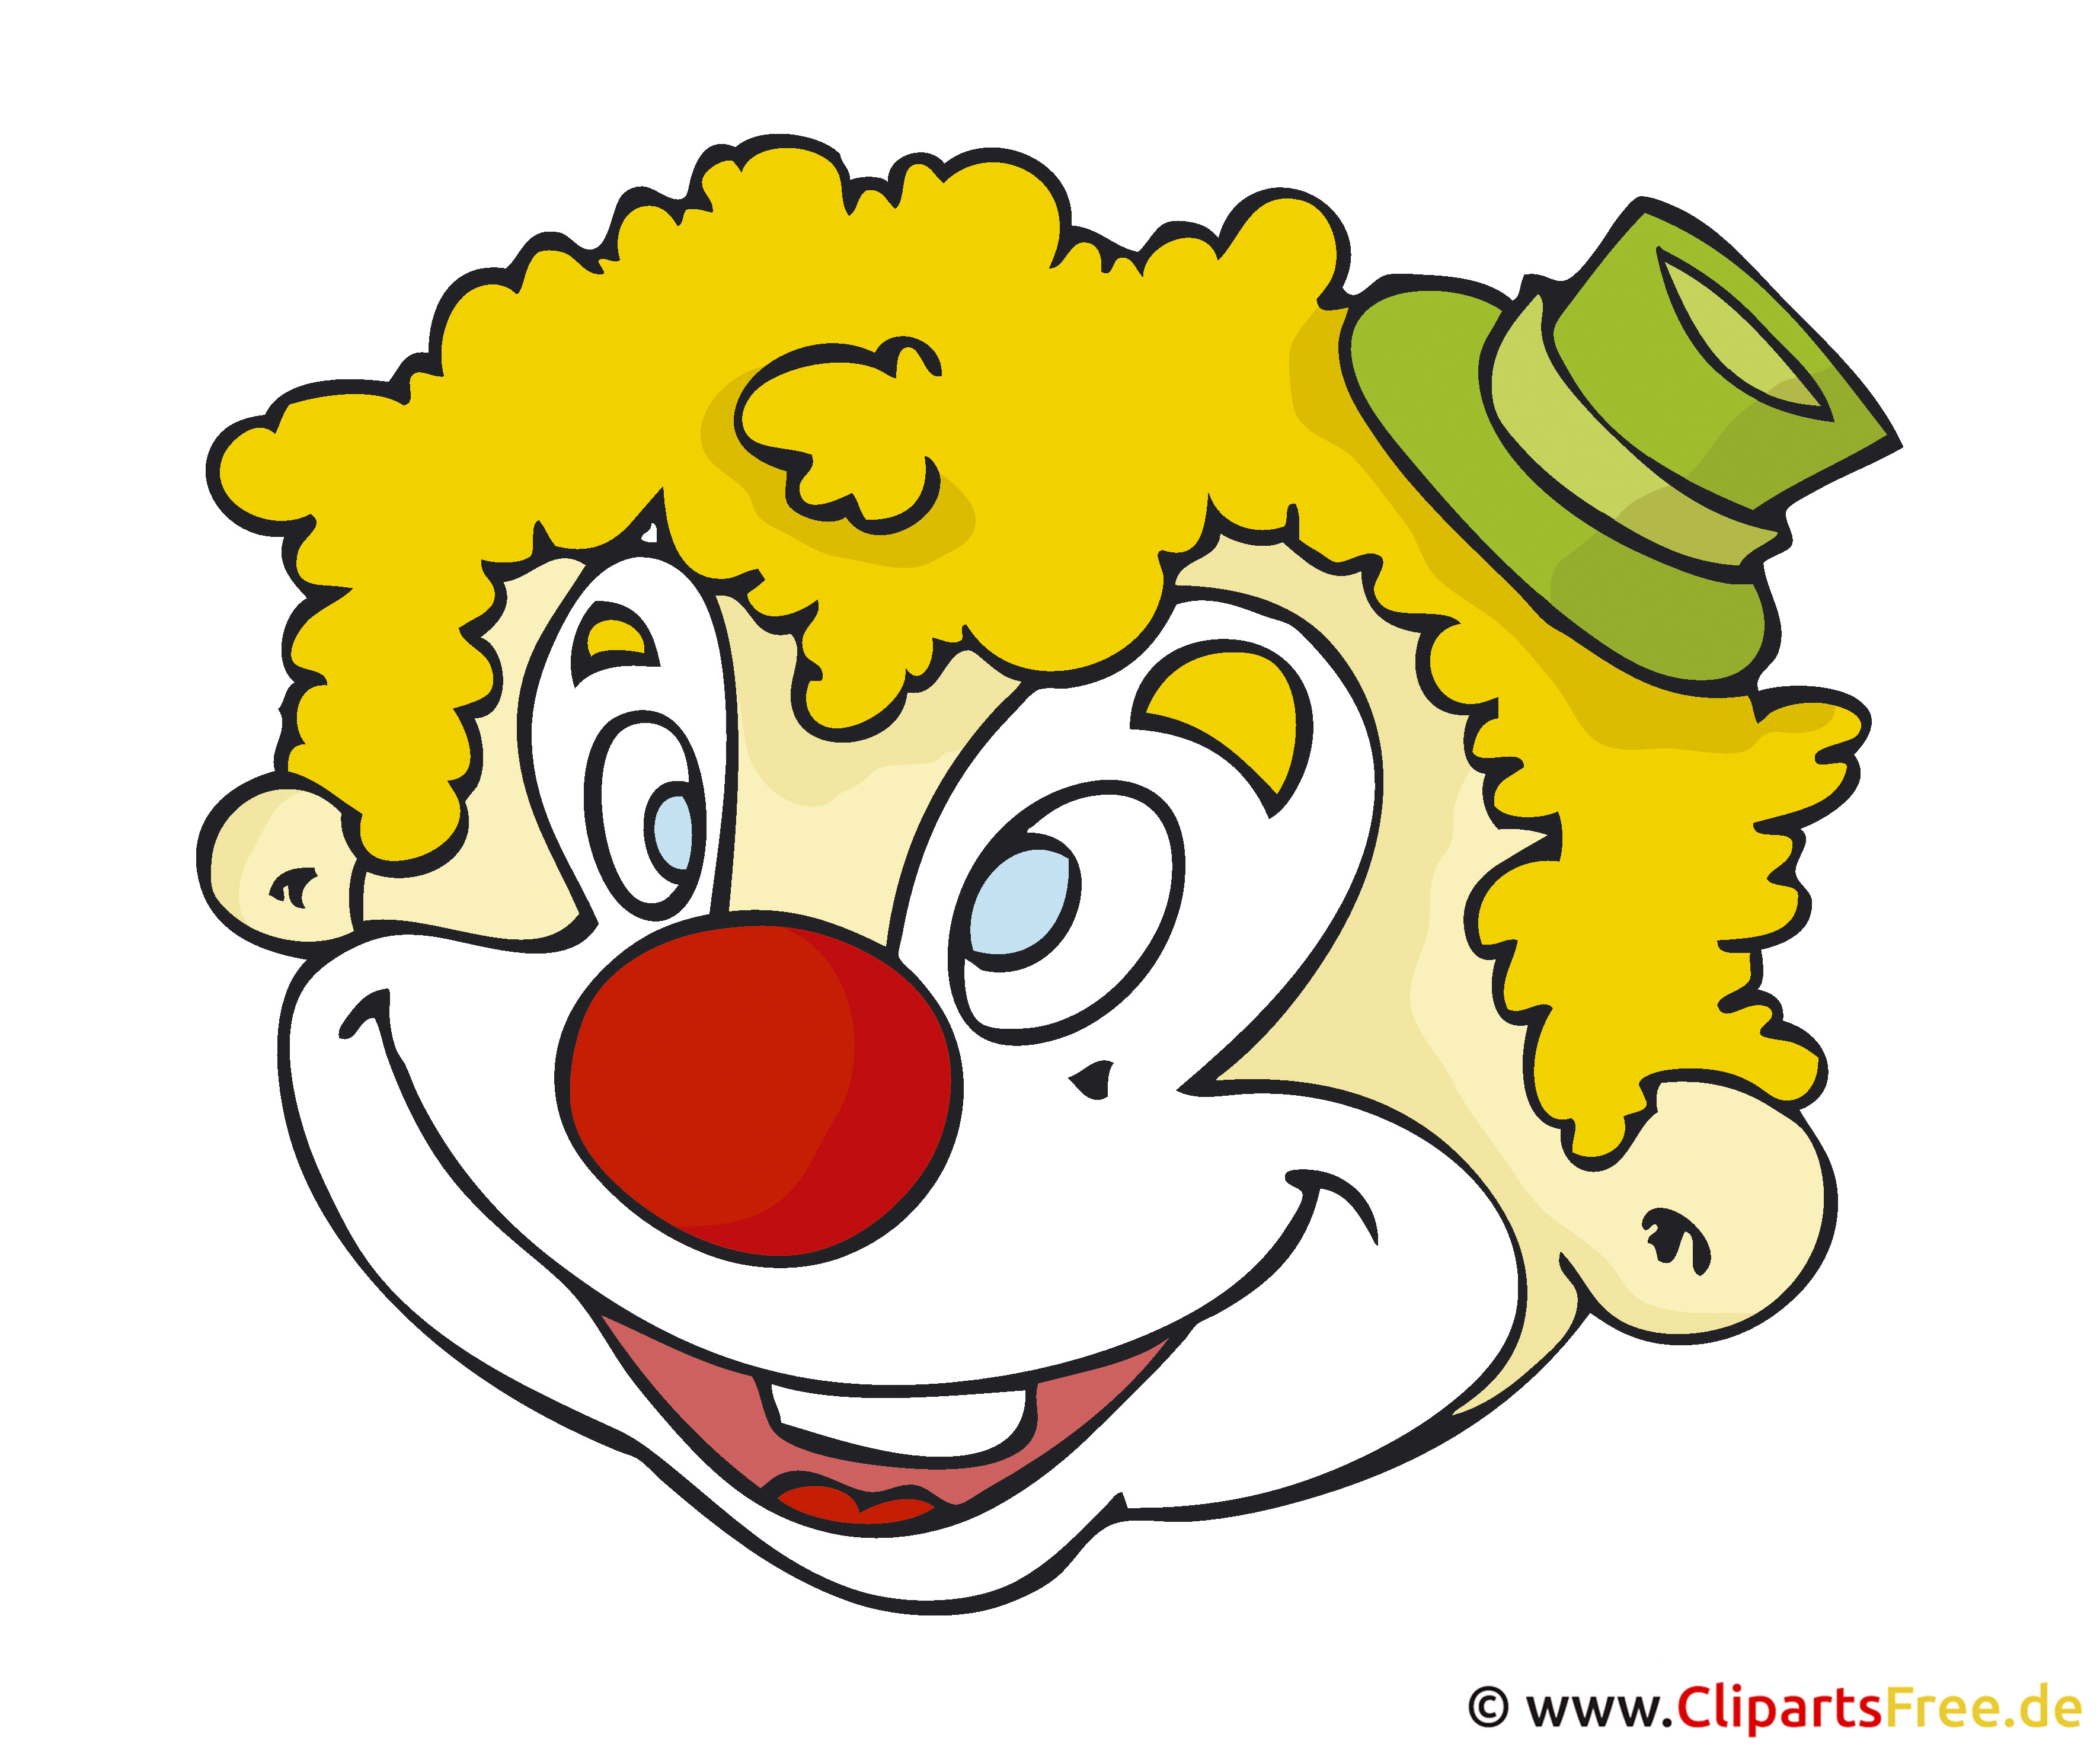 clown-clipart-picture-cartoon-graphic-illustration